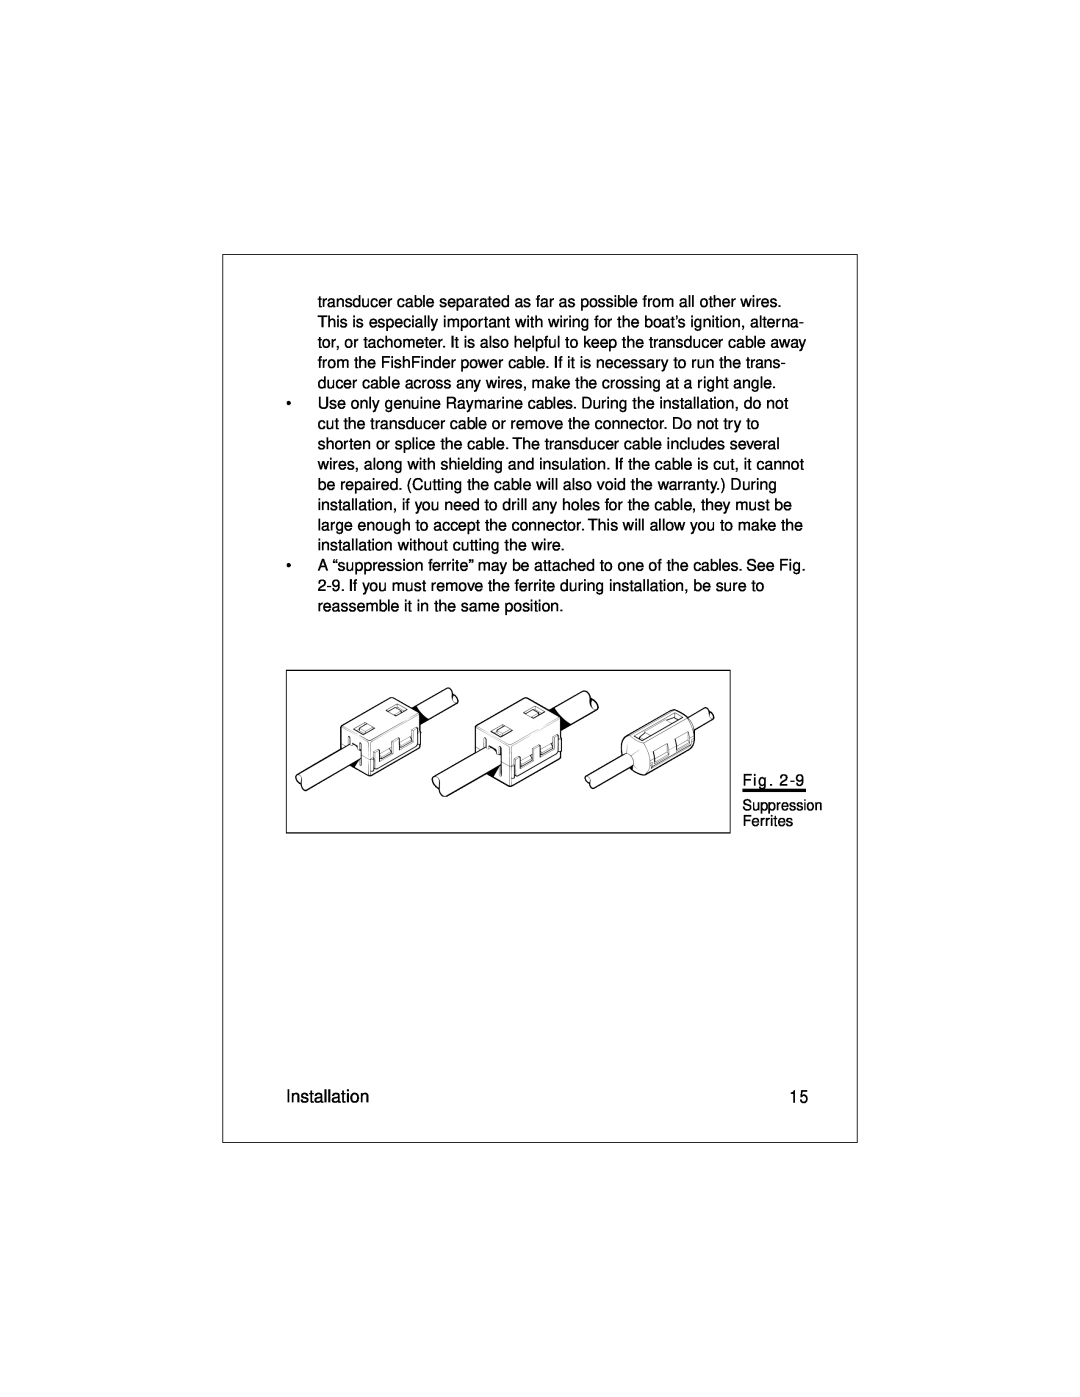 Raymarine L470 instruction manual Installation, Suppression Ferrites 